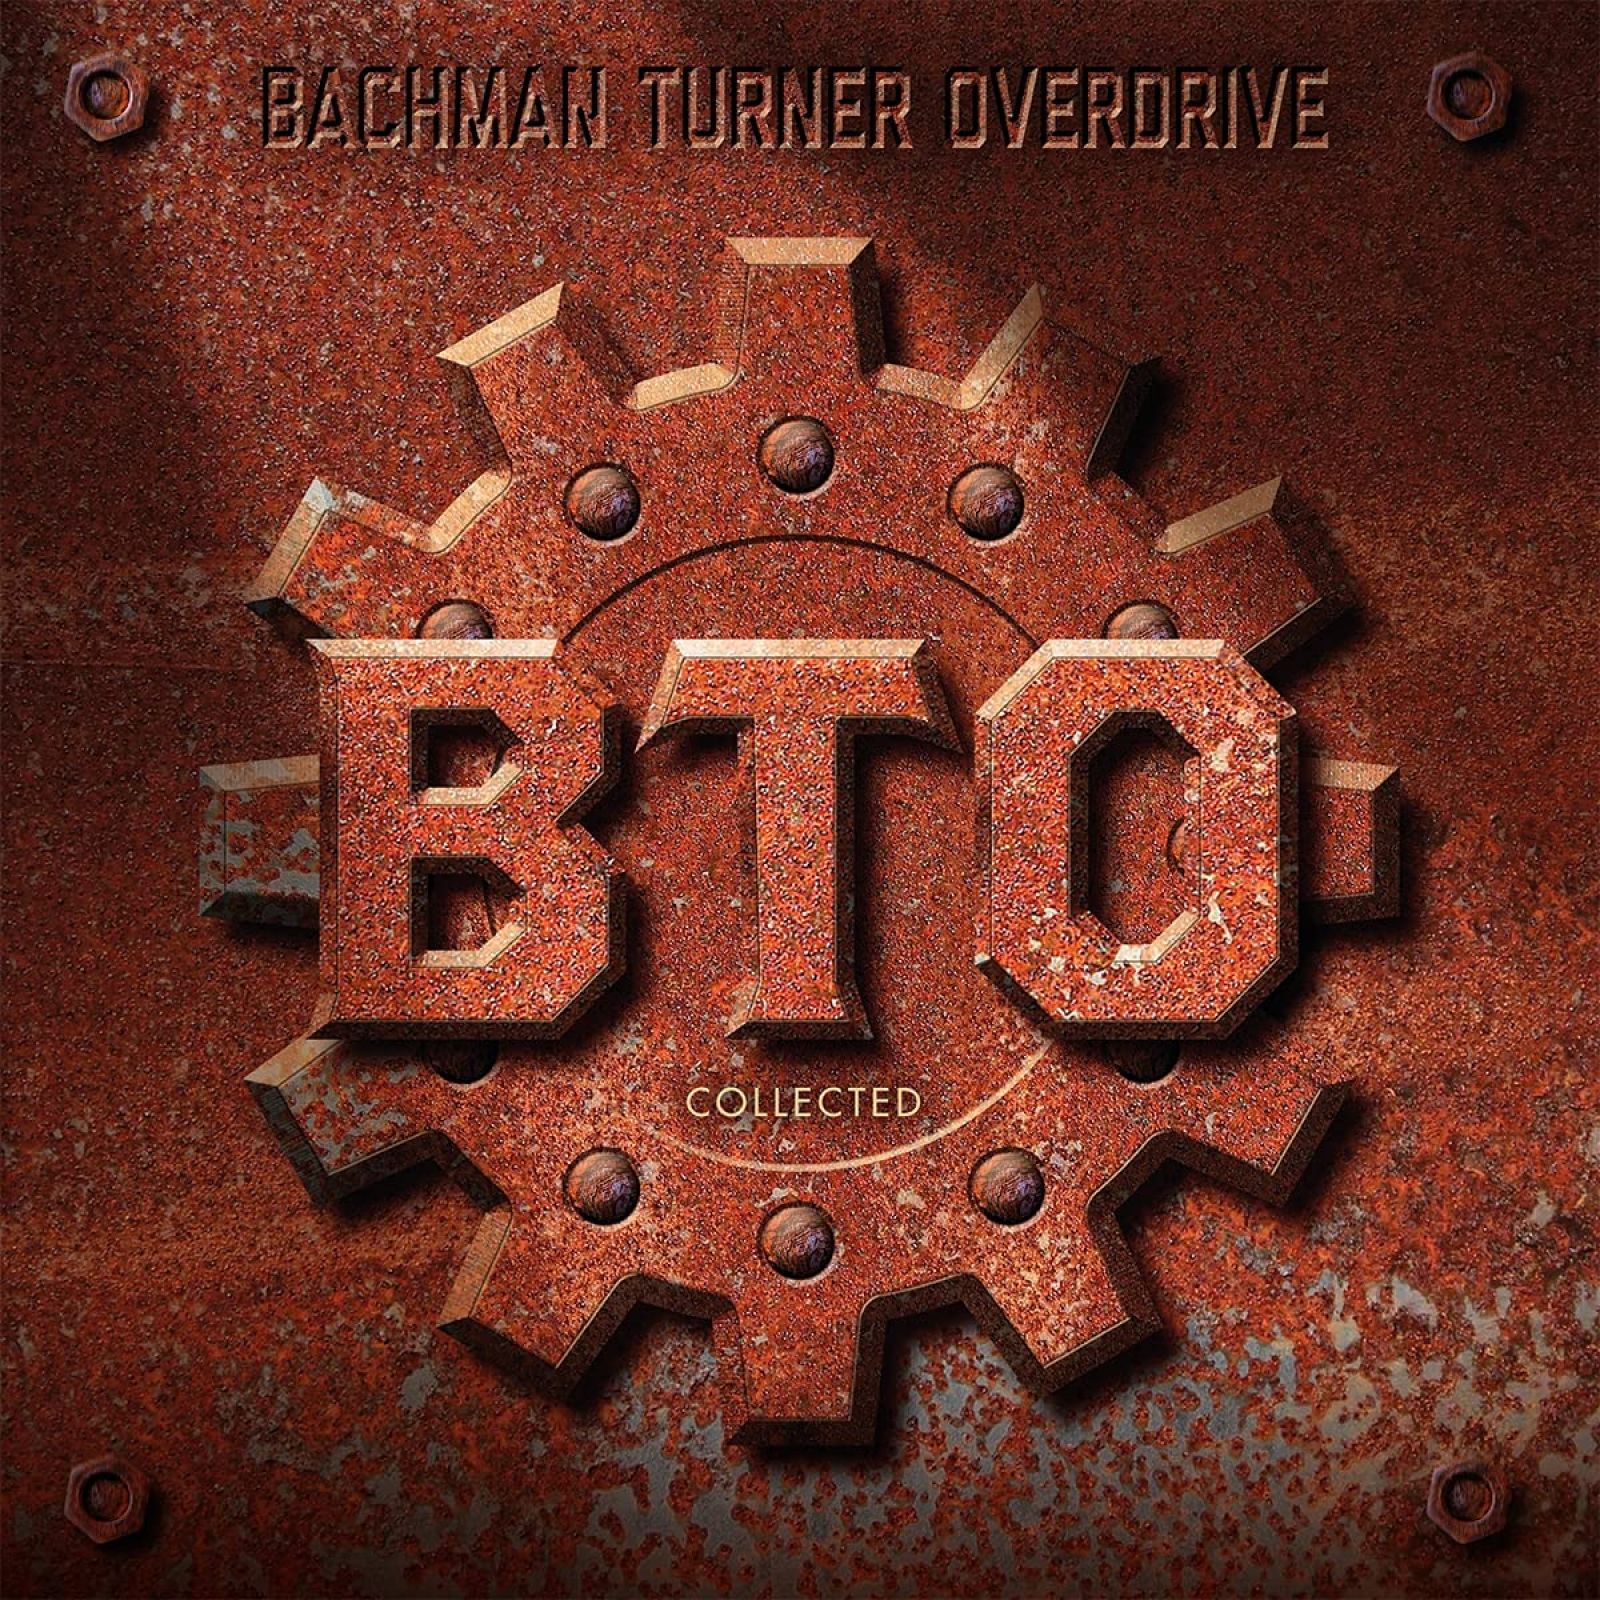 Виниловая пластинка Bachman Turner Overdrive, Collected: Greatest Songs (0600753911327)